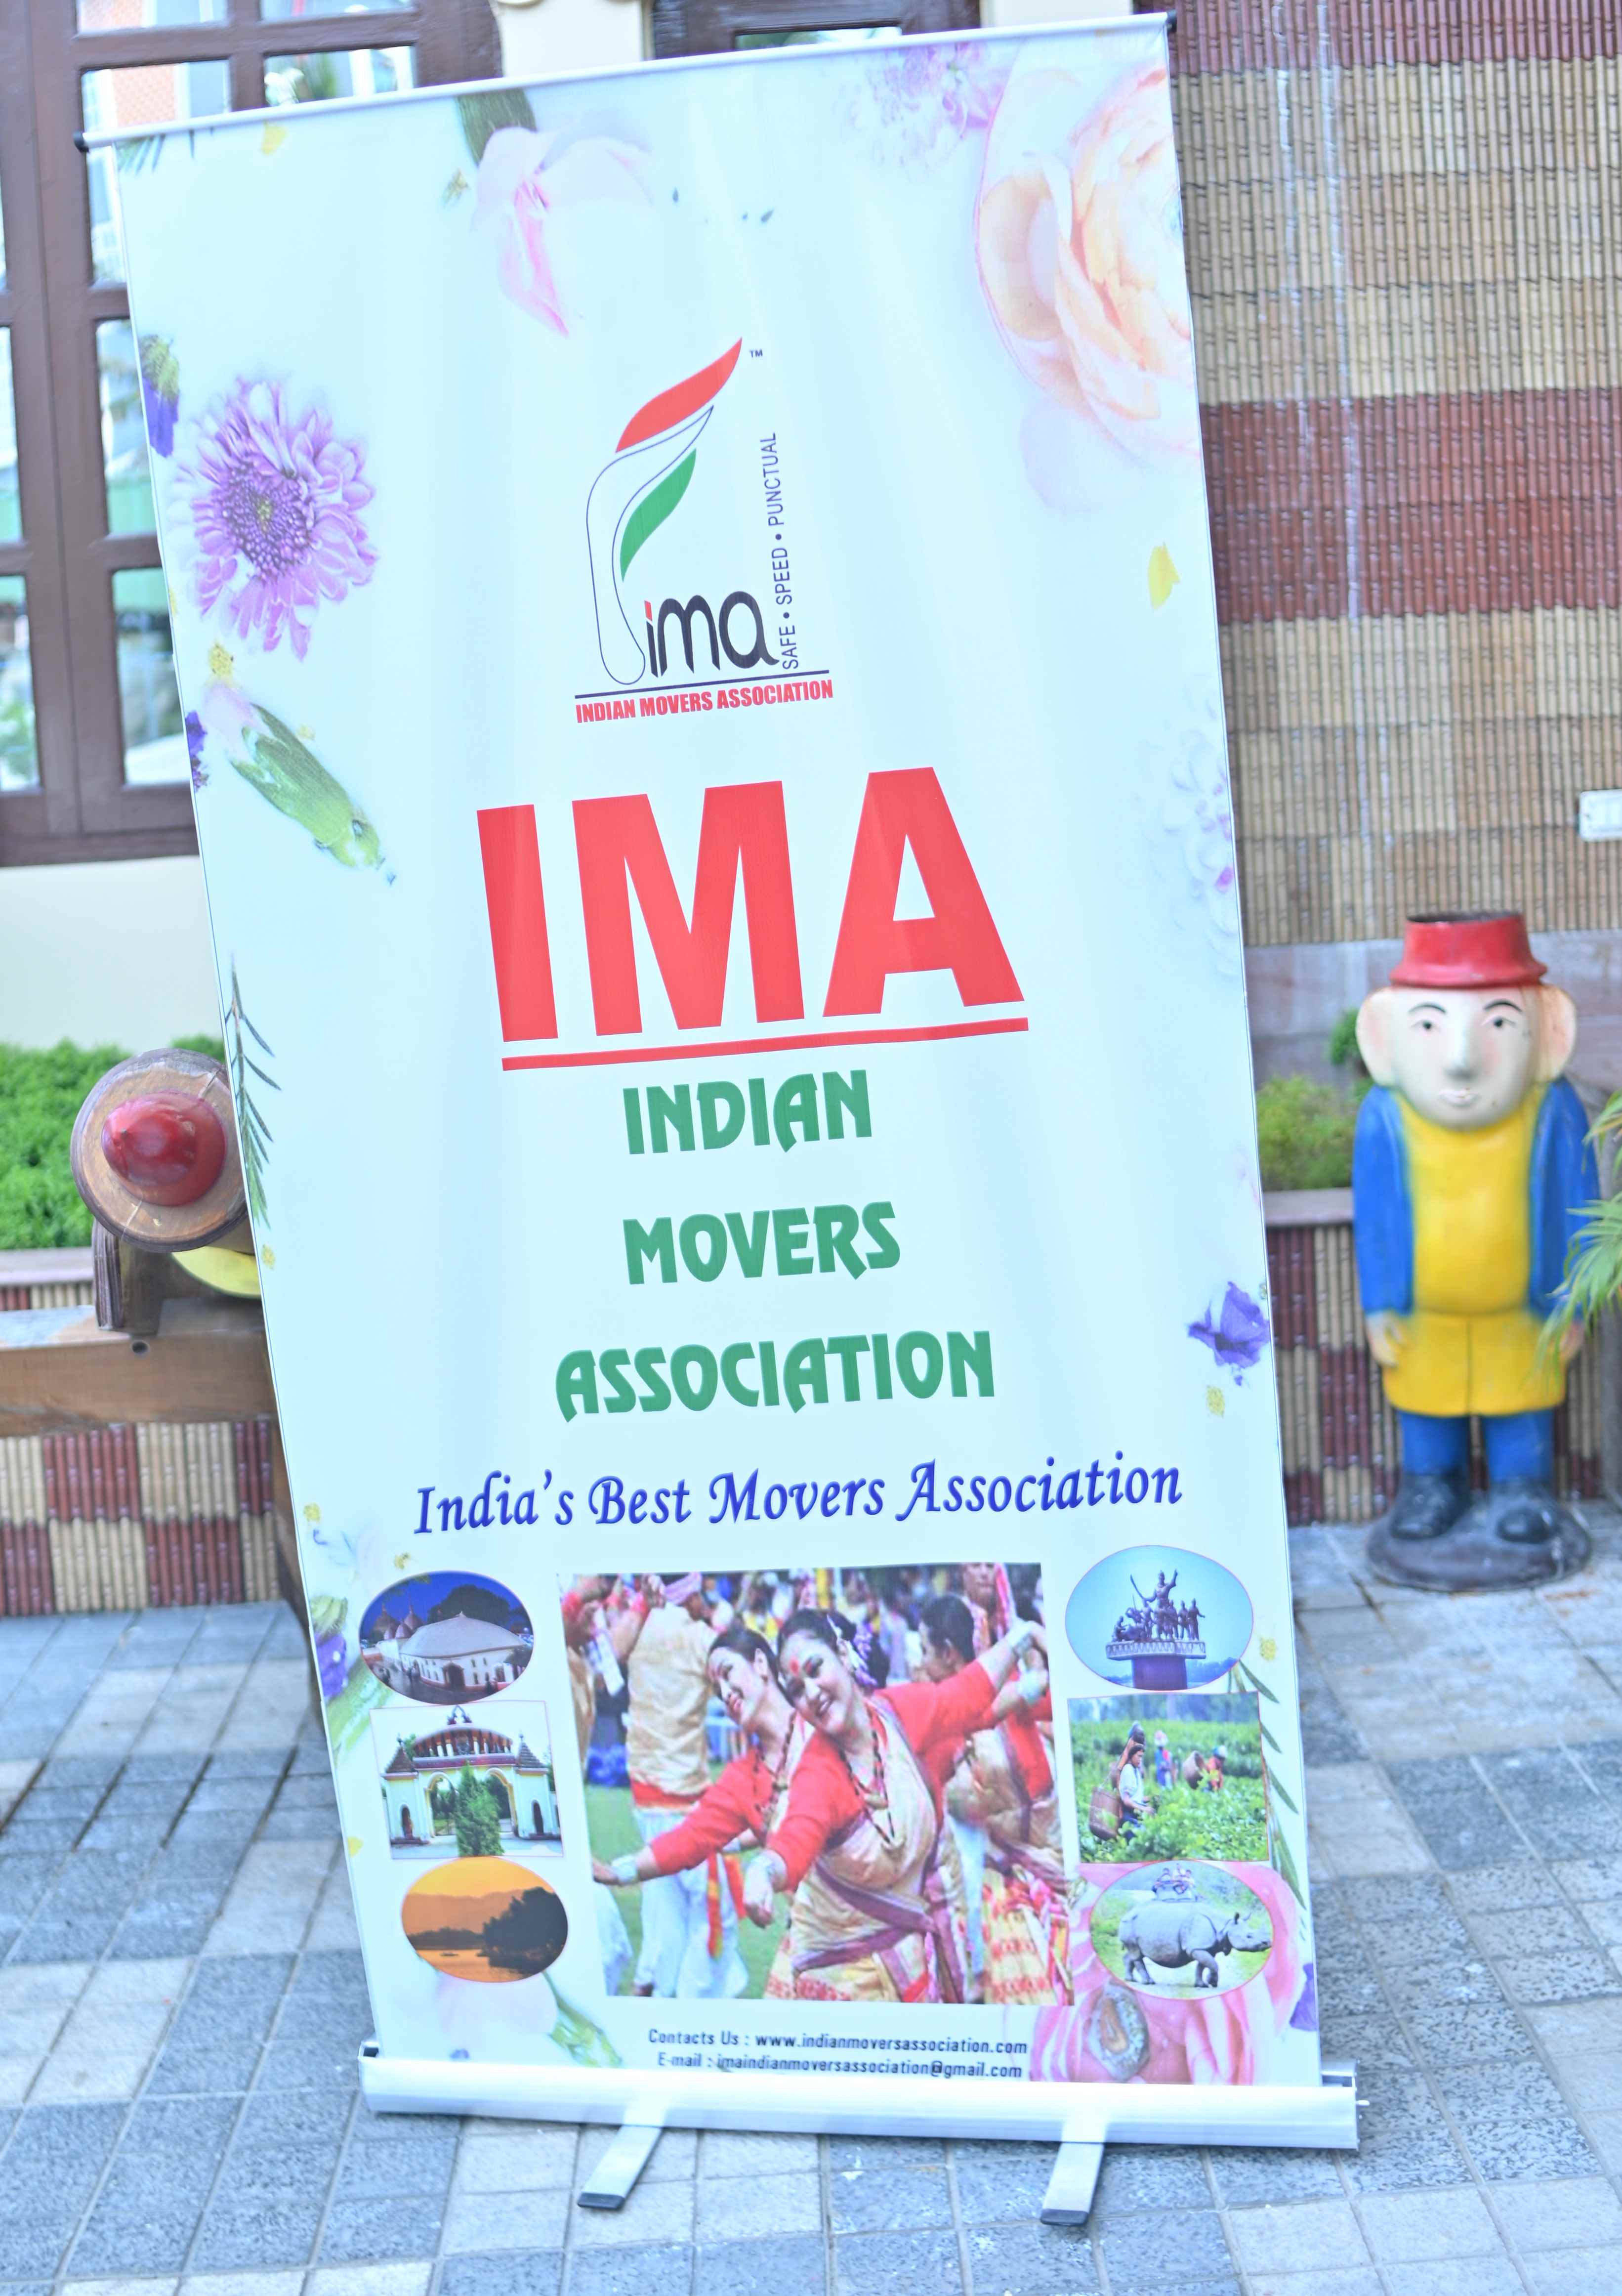 IMA 8th National Conference 2023 Guwahati (Assam)